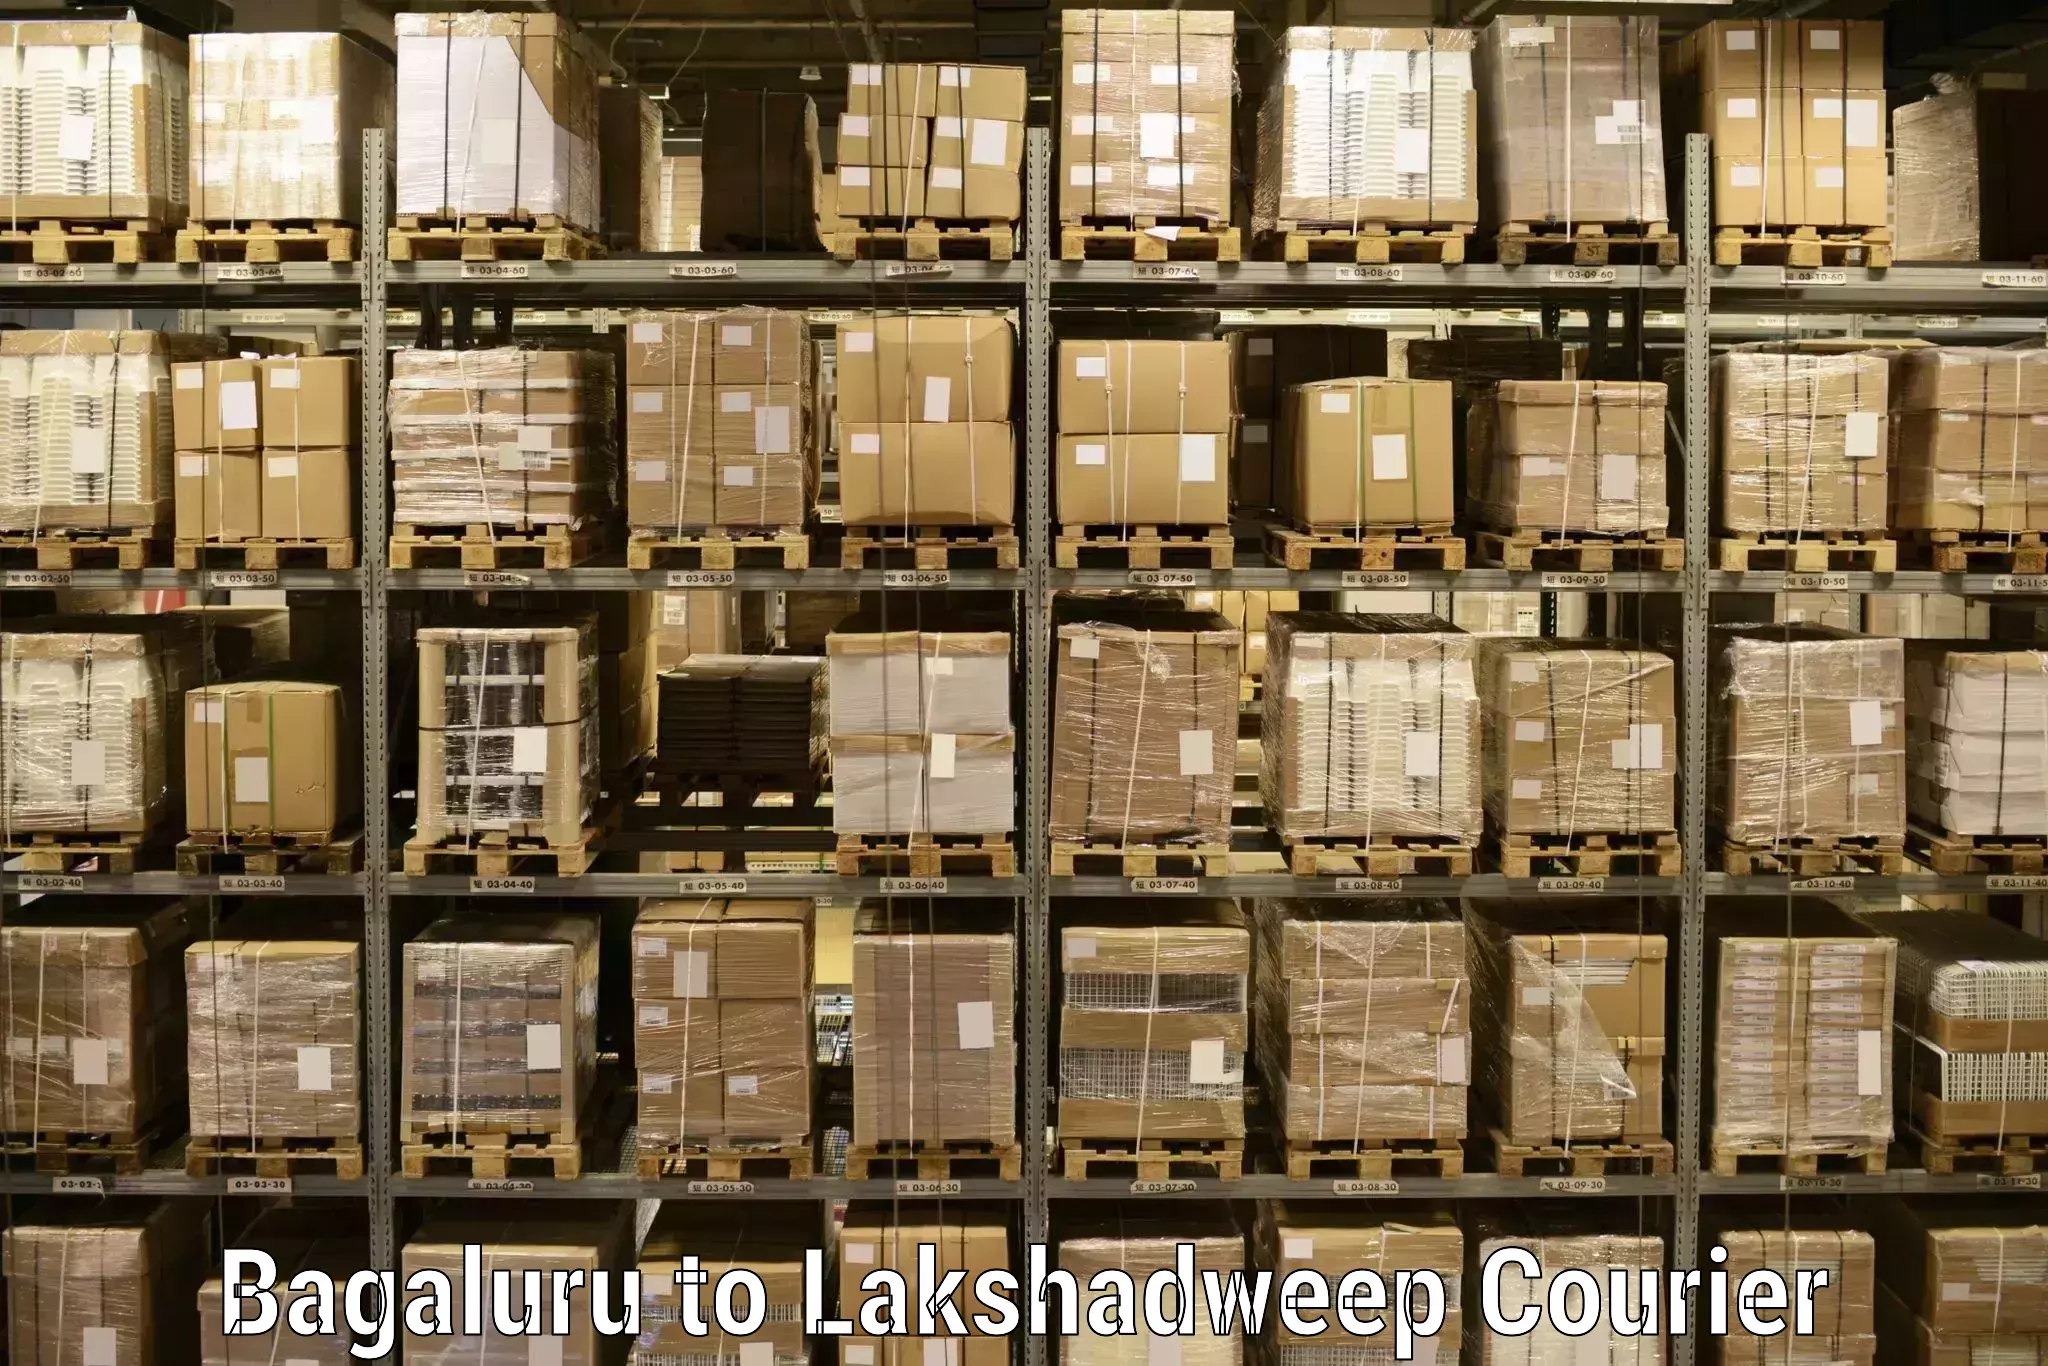 Courier service booking Bagaluru to Lakshadweep